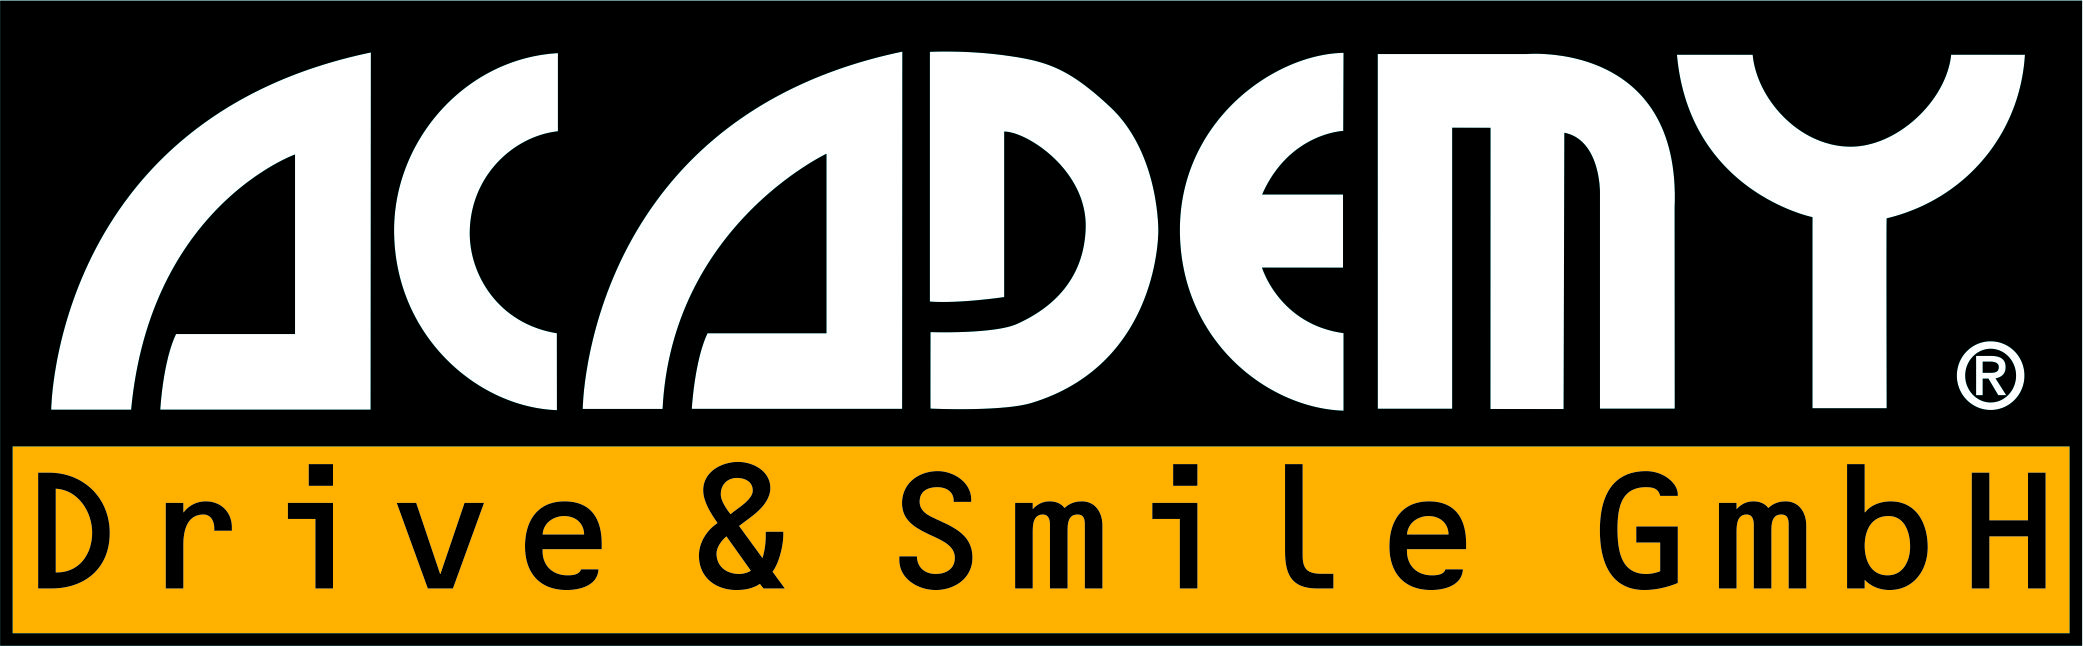 ACADEMY Fahrschule Drive & Smile GmbH